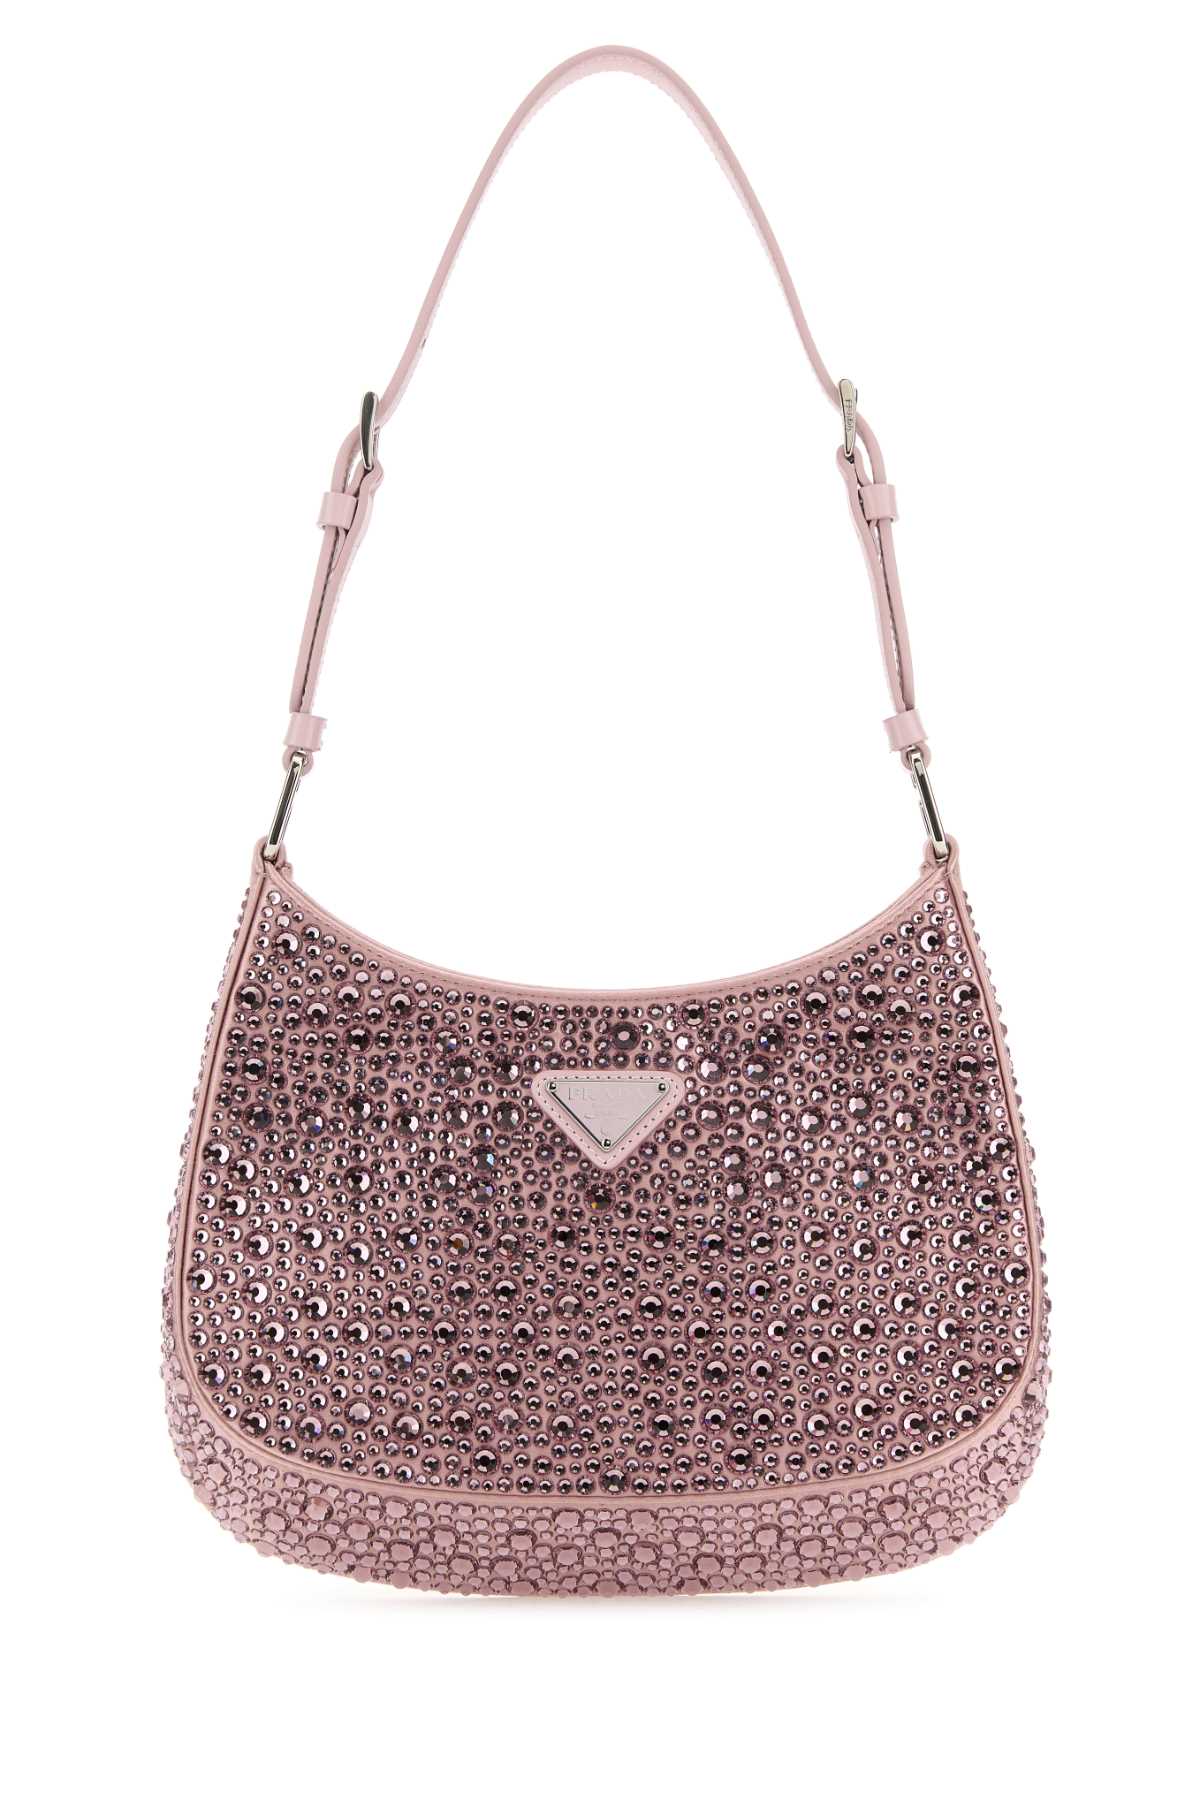 Prada Embellished Satin Cleo Handbag